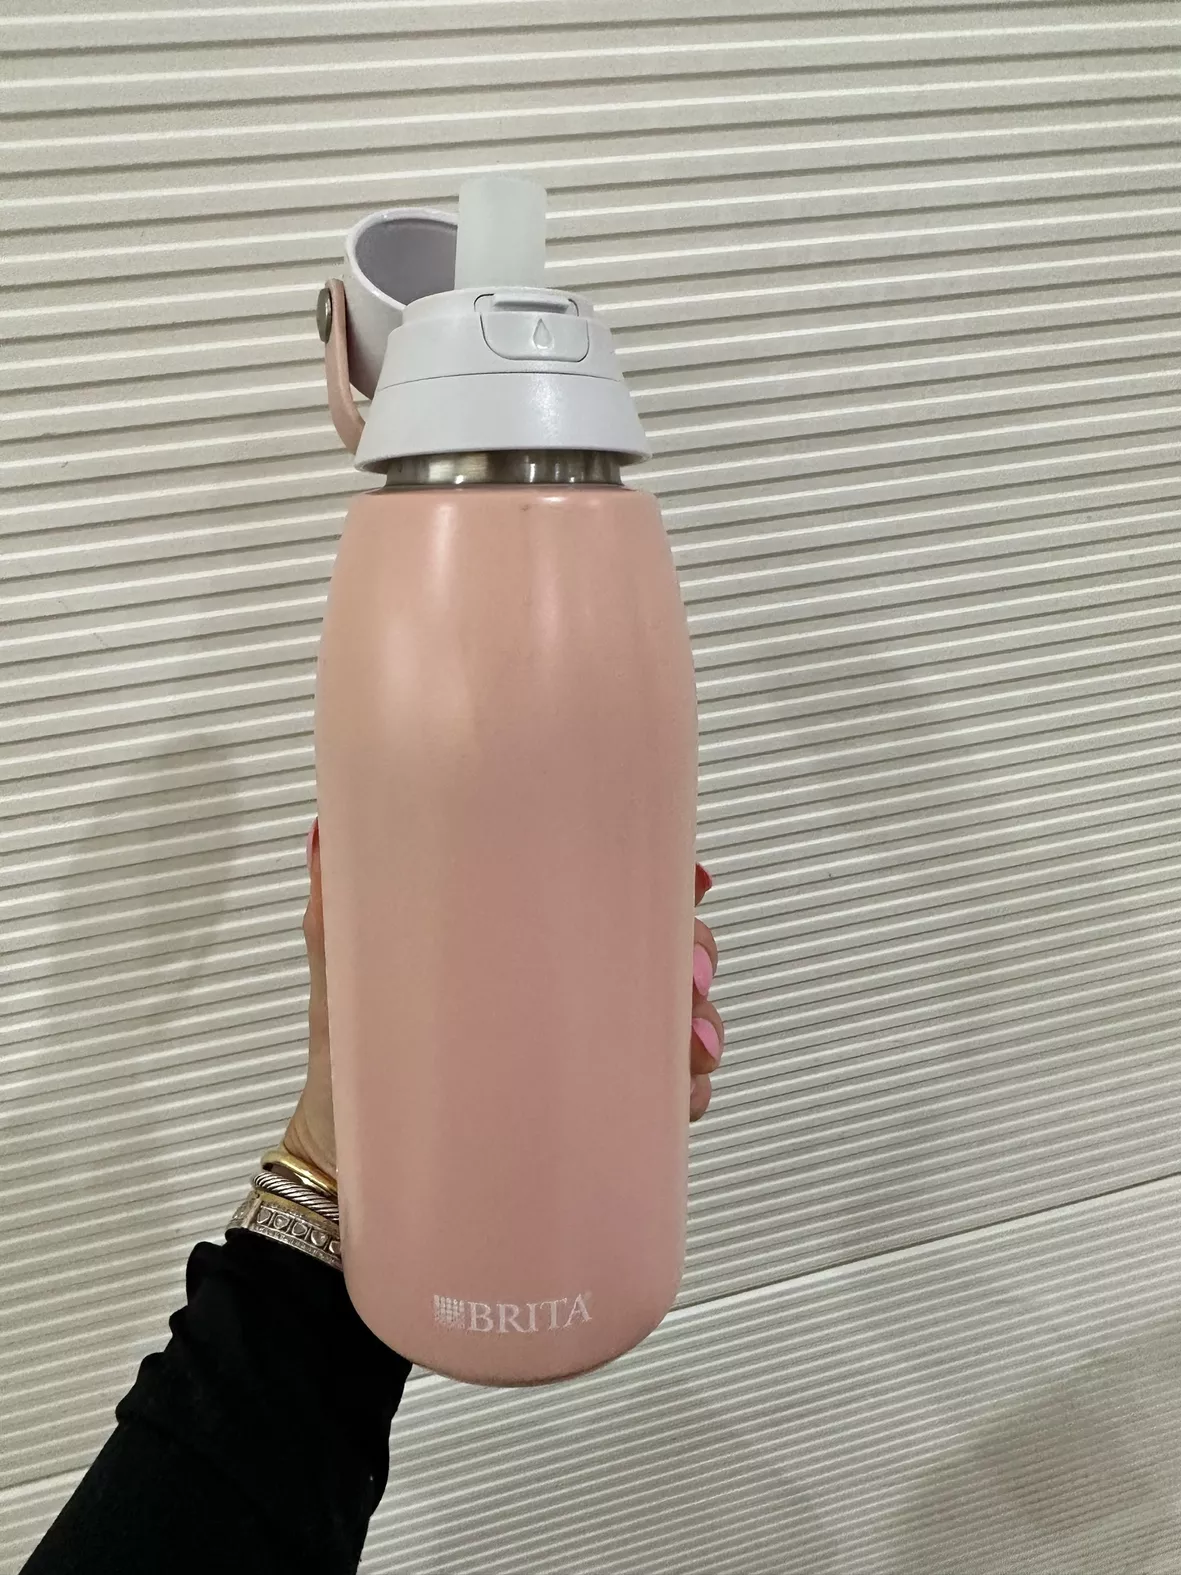 Brita Stainless Steel Water Filter Bottle 32 oz